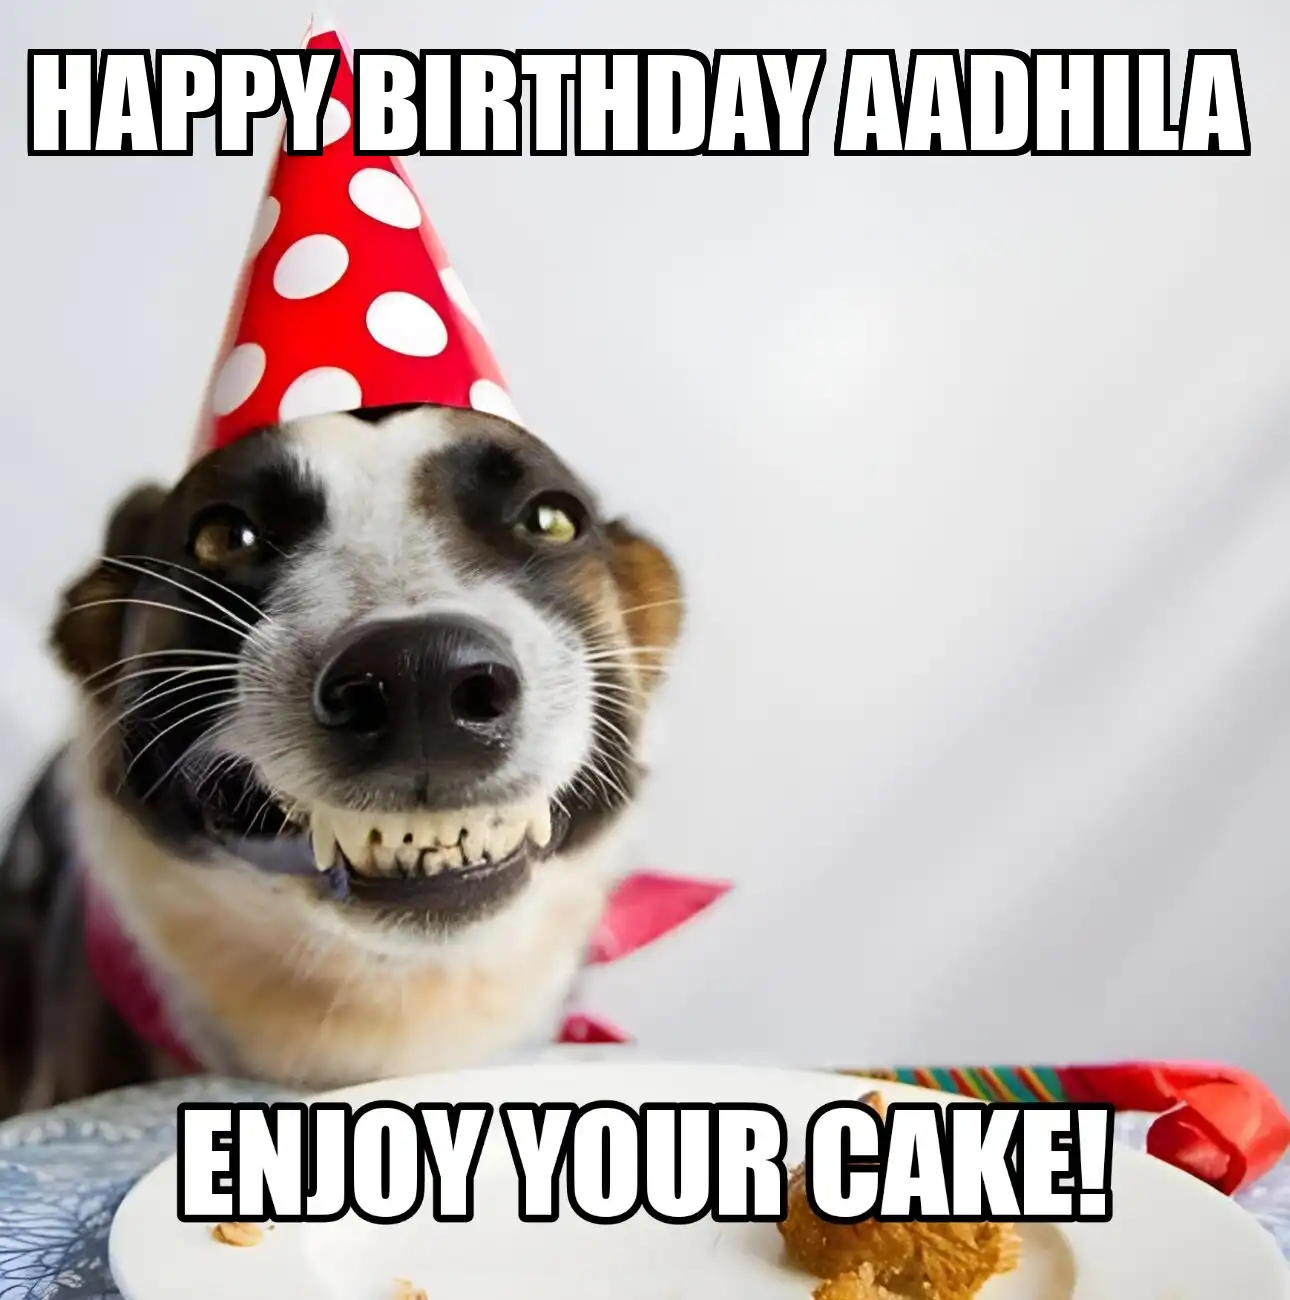 Happy Birthday Aadhila Enjoy Your Cake Dog Meme